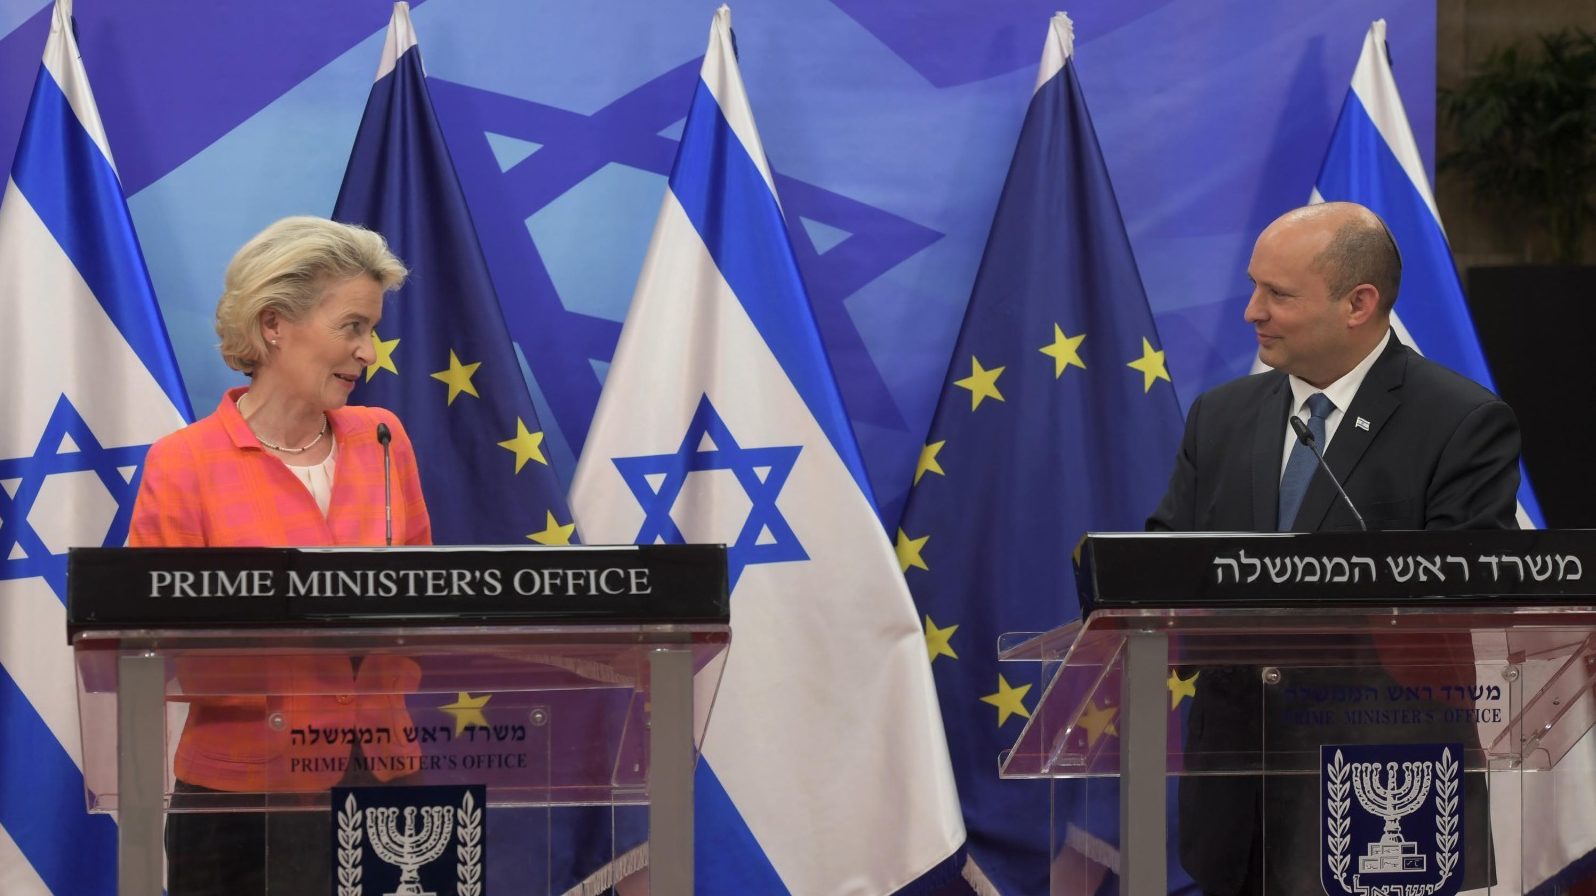 EU, Israel To Increase Energy Cooperation